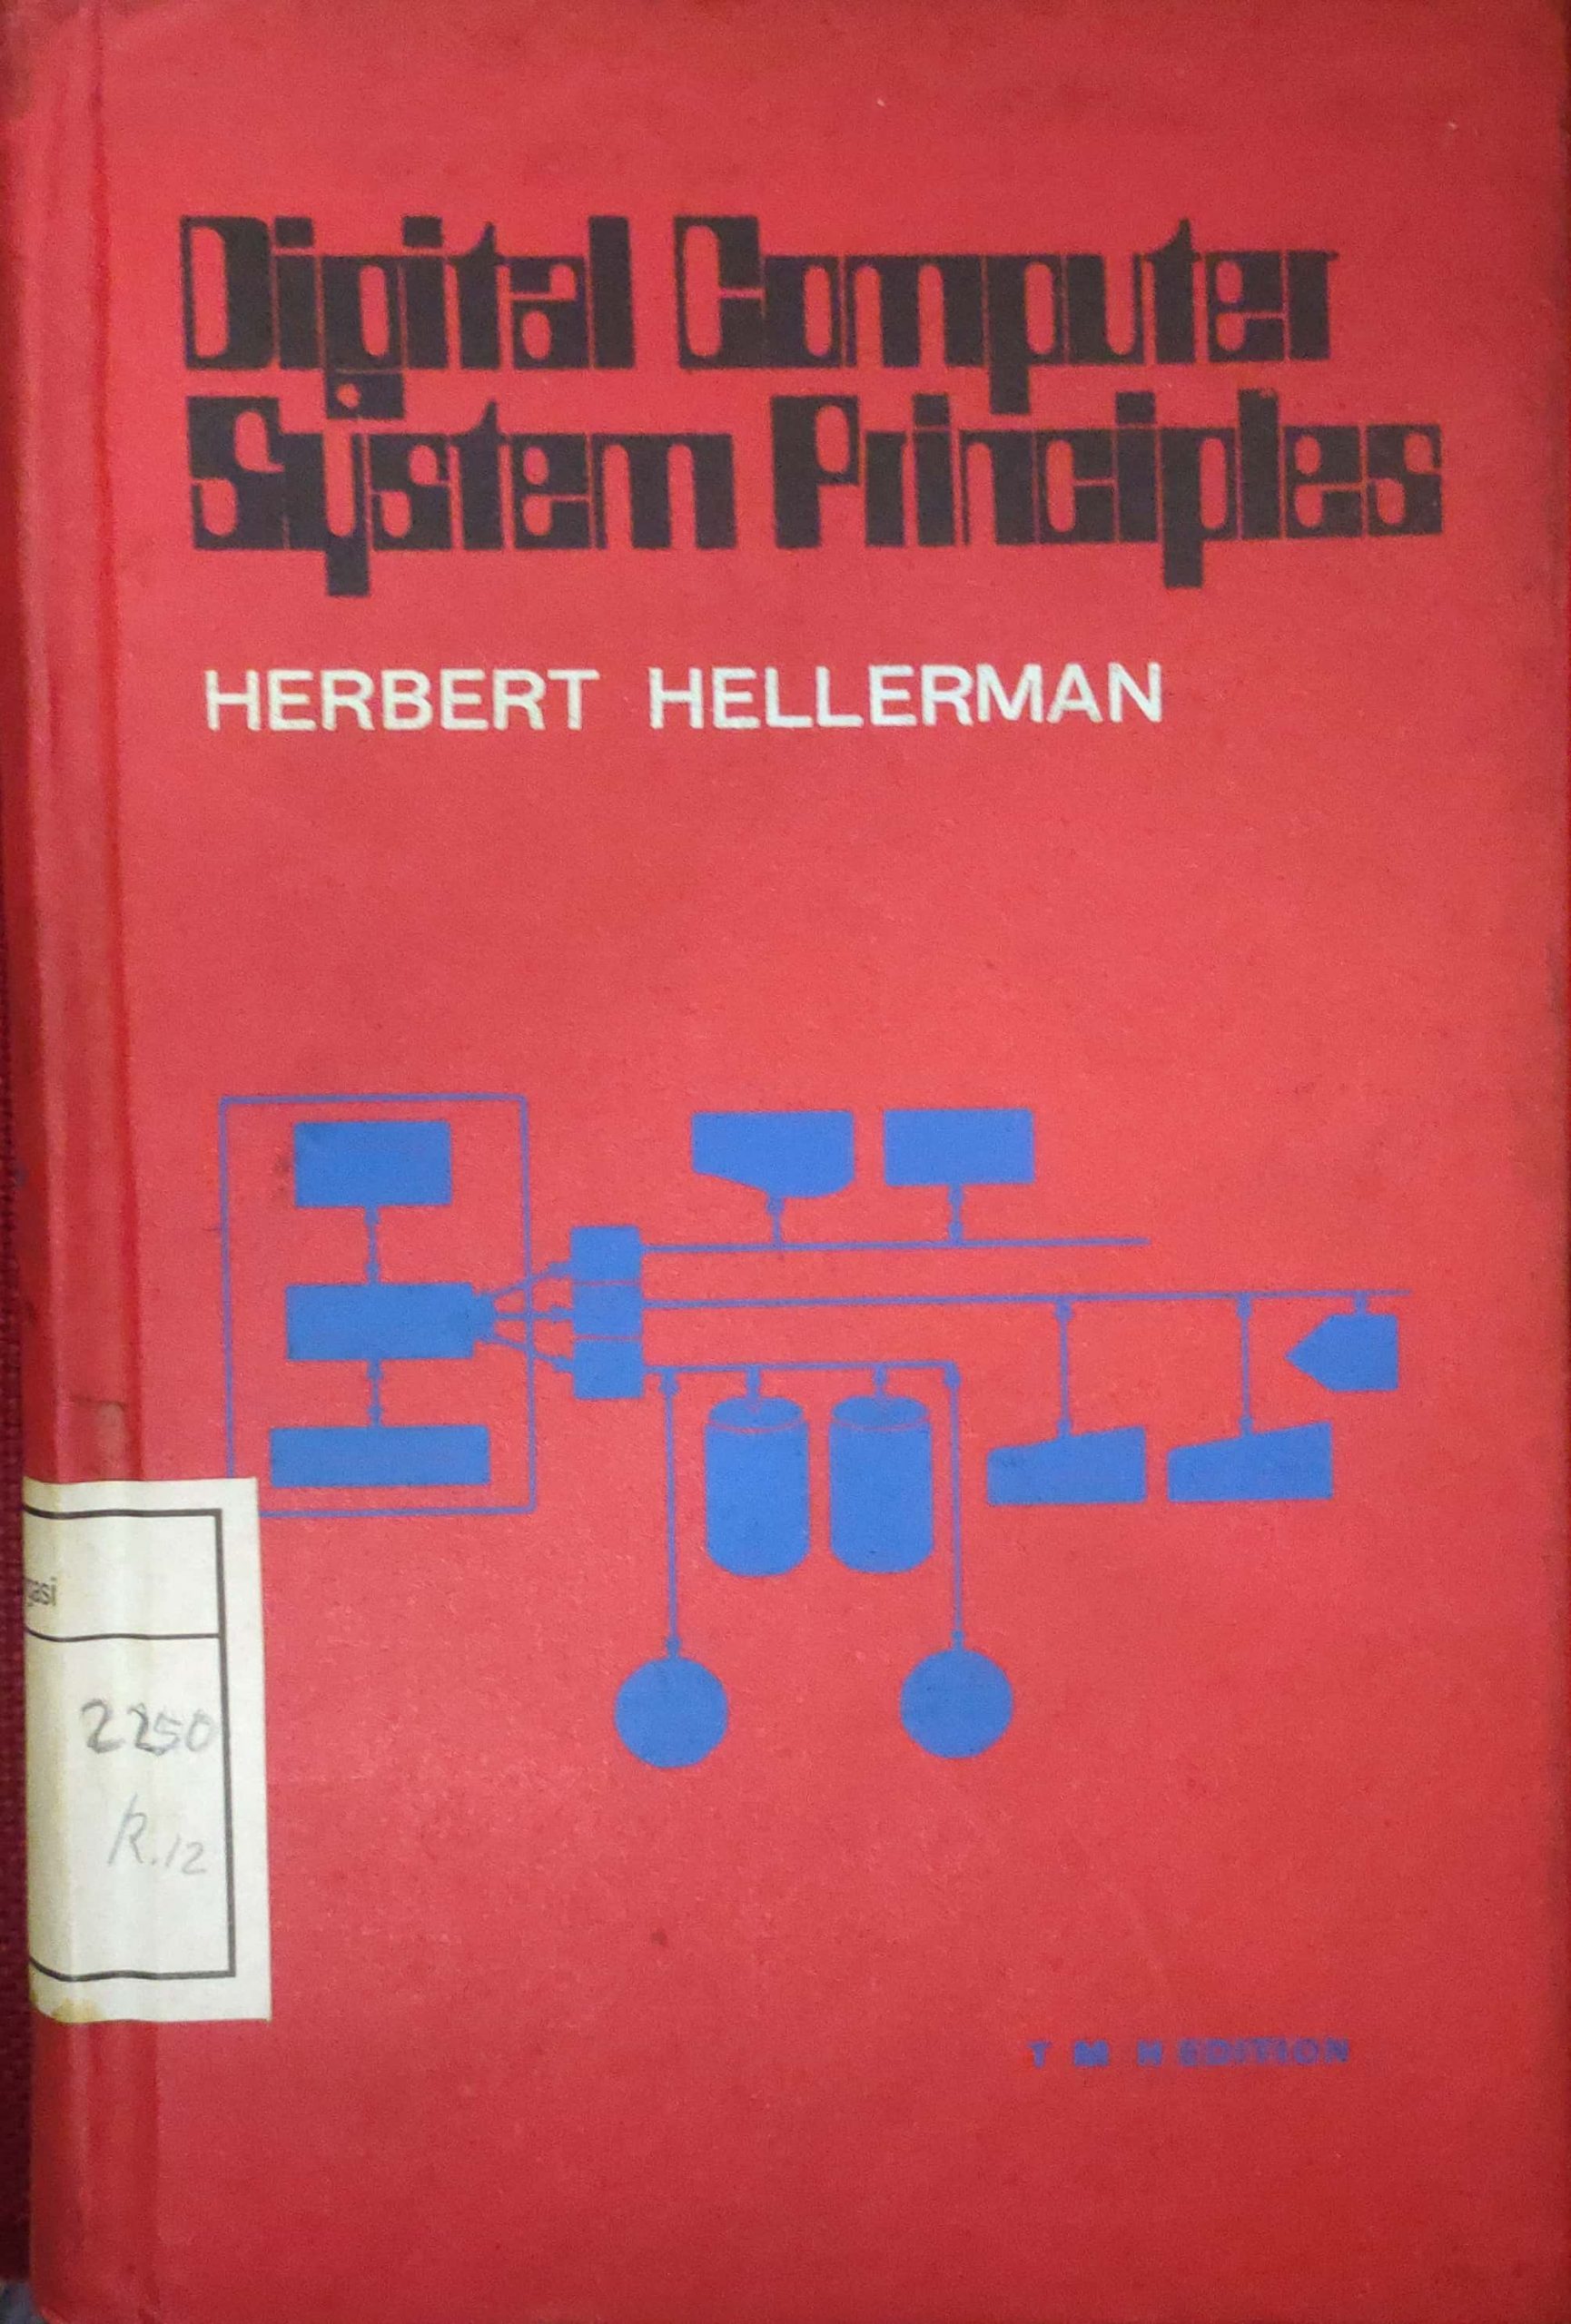 Digital Computer System Principles